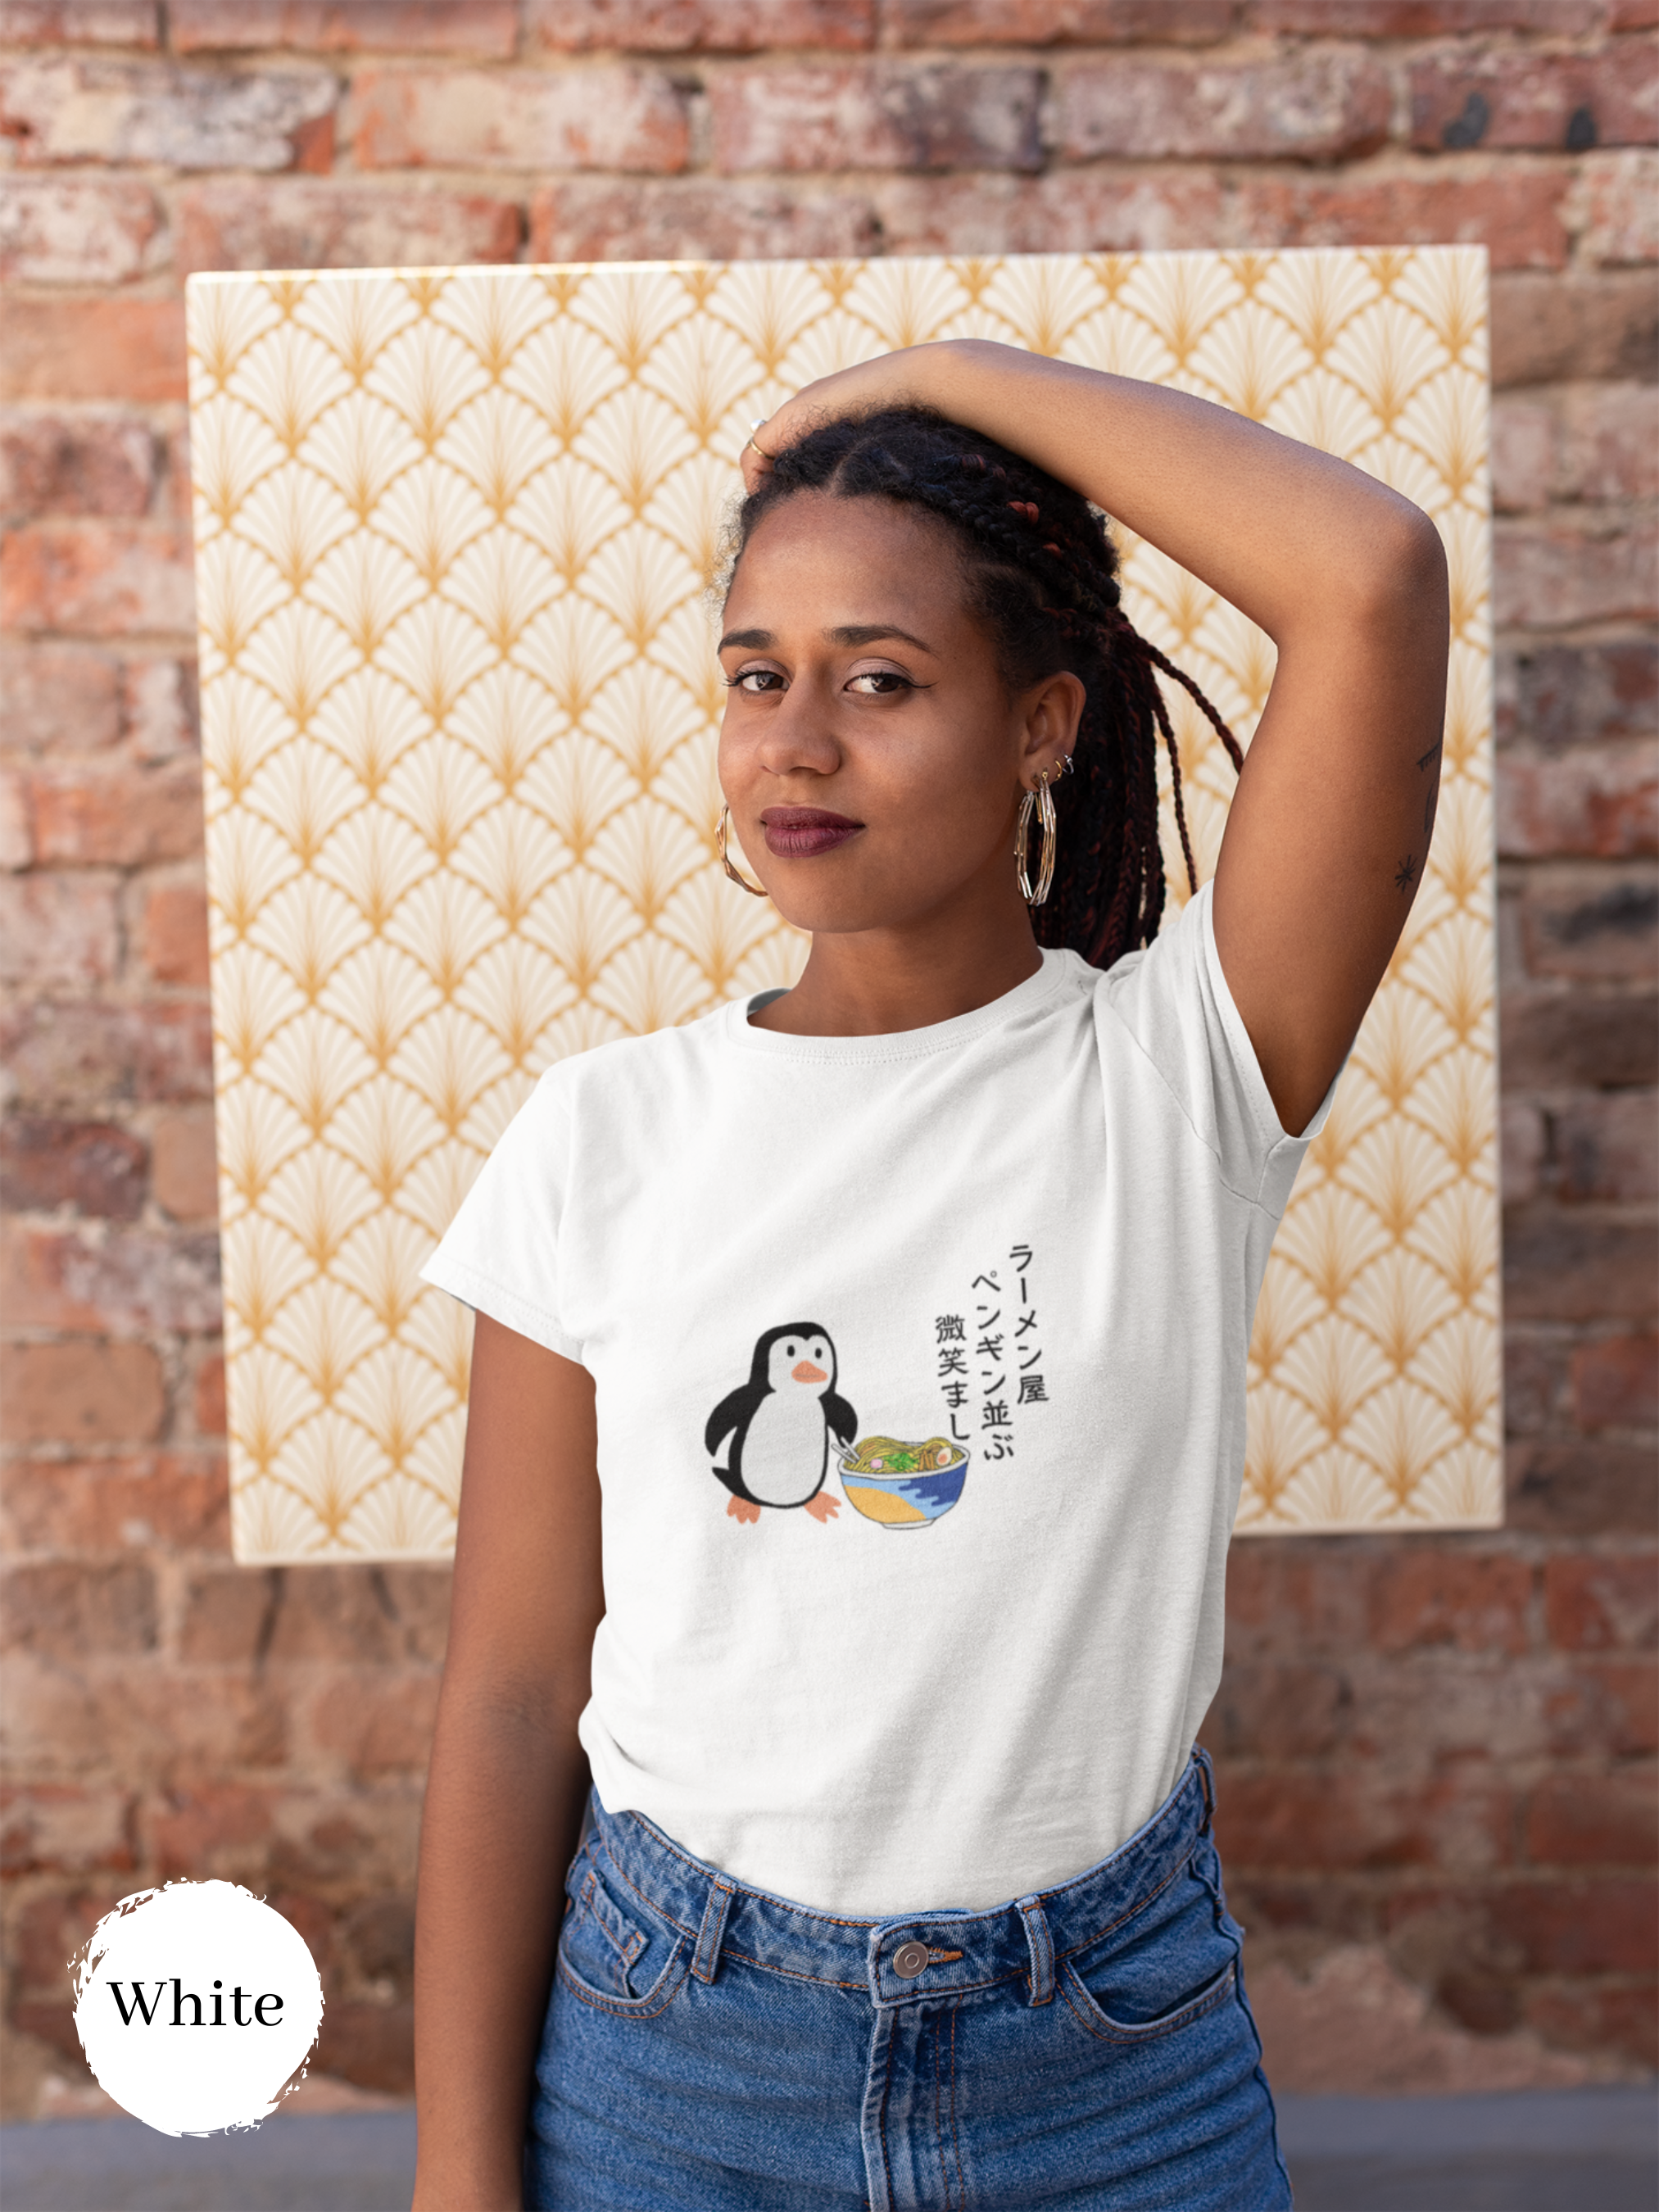 Ramen T-shirt with Haiku: "Penguin Lined Up at Ramen Shop - Delightful Scene" featuring Penguin and Ramen Art, Japanese Foodie Shirt